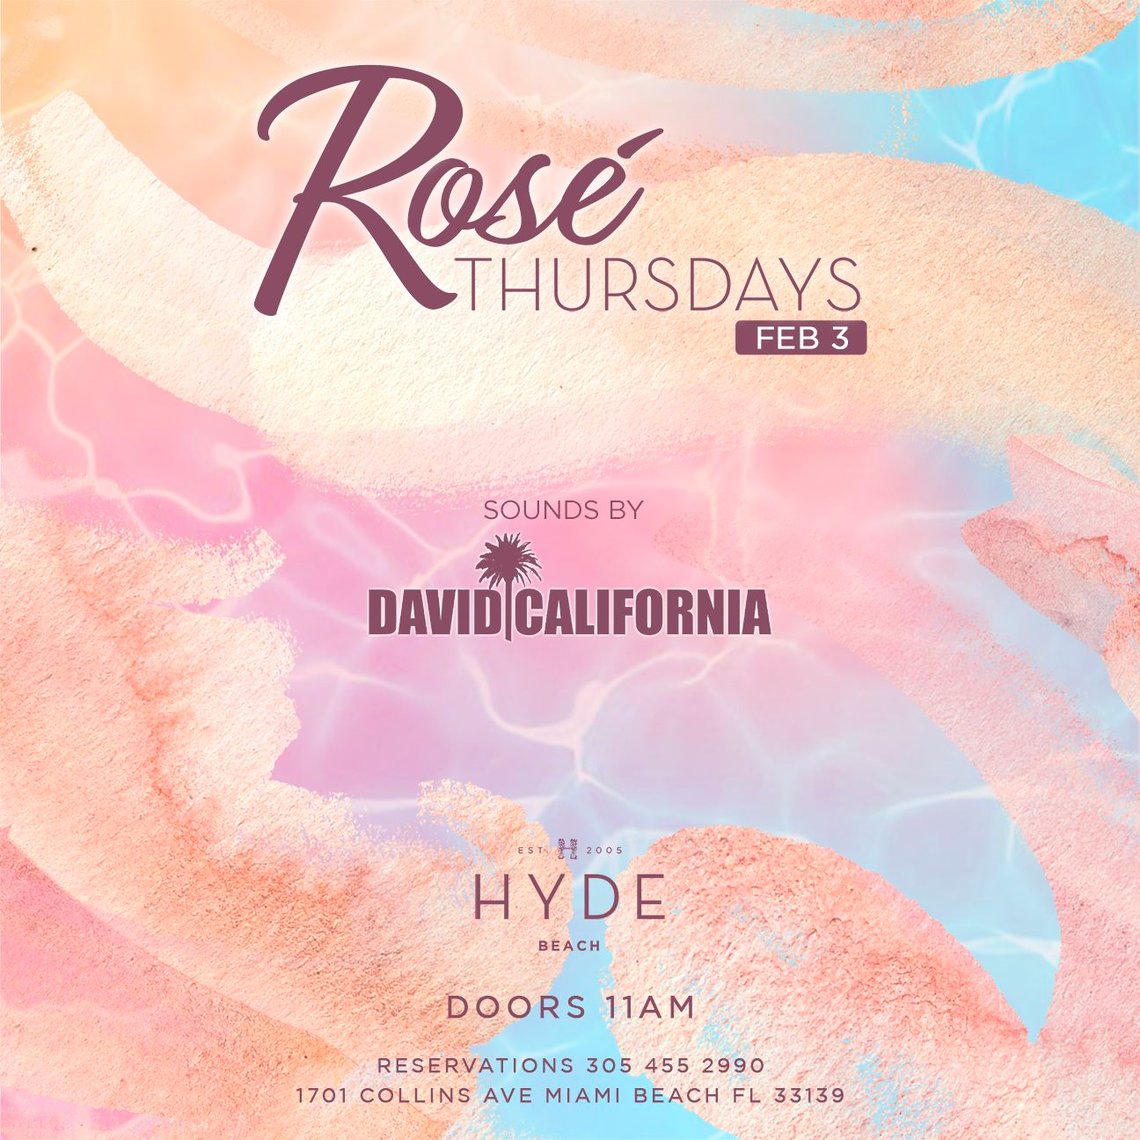 Rosé Thursdays at SLS South Beach Hyde Beach - David California 